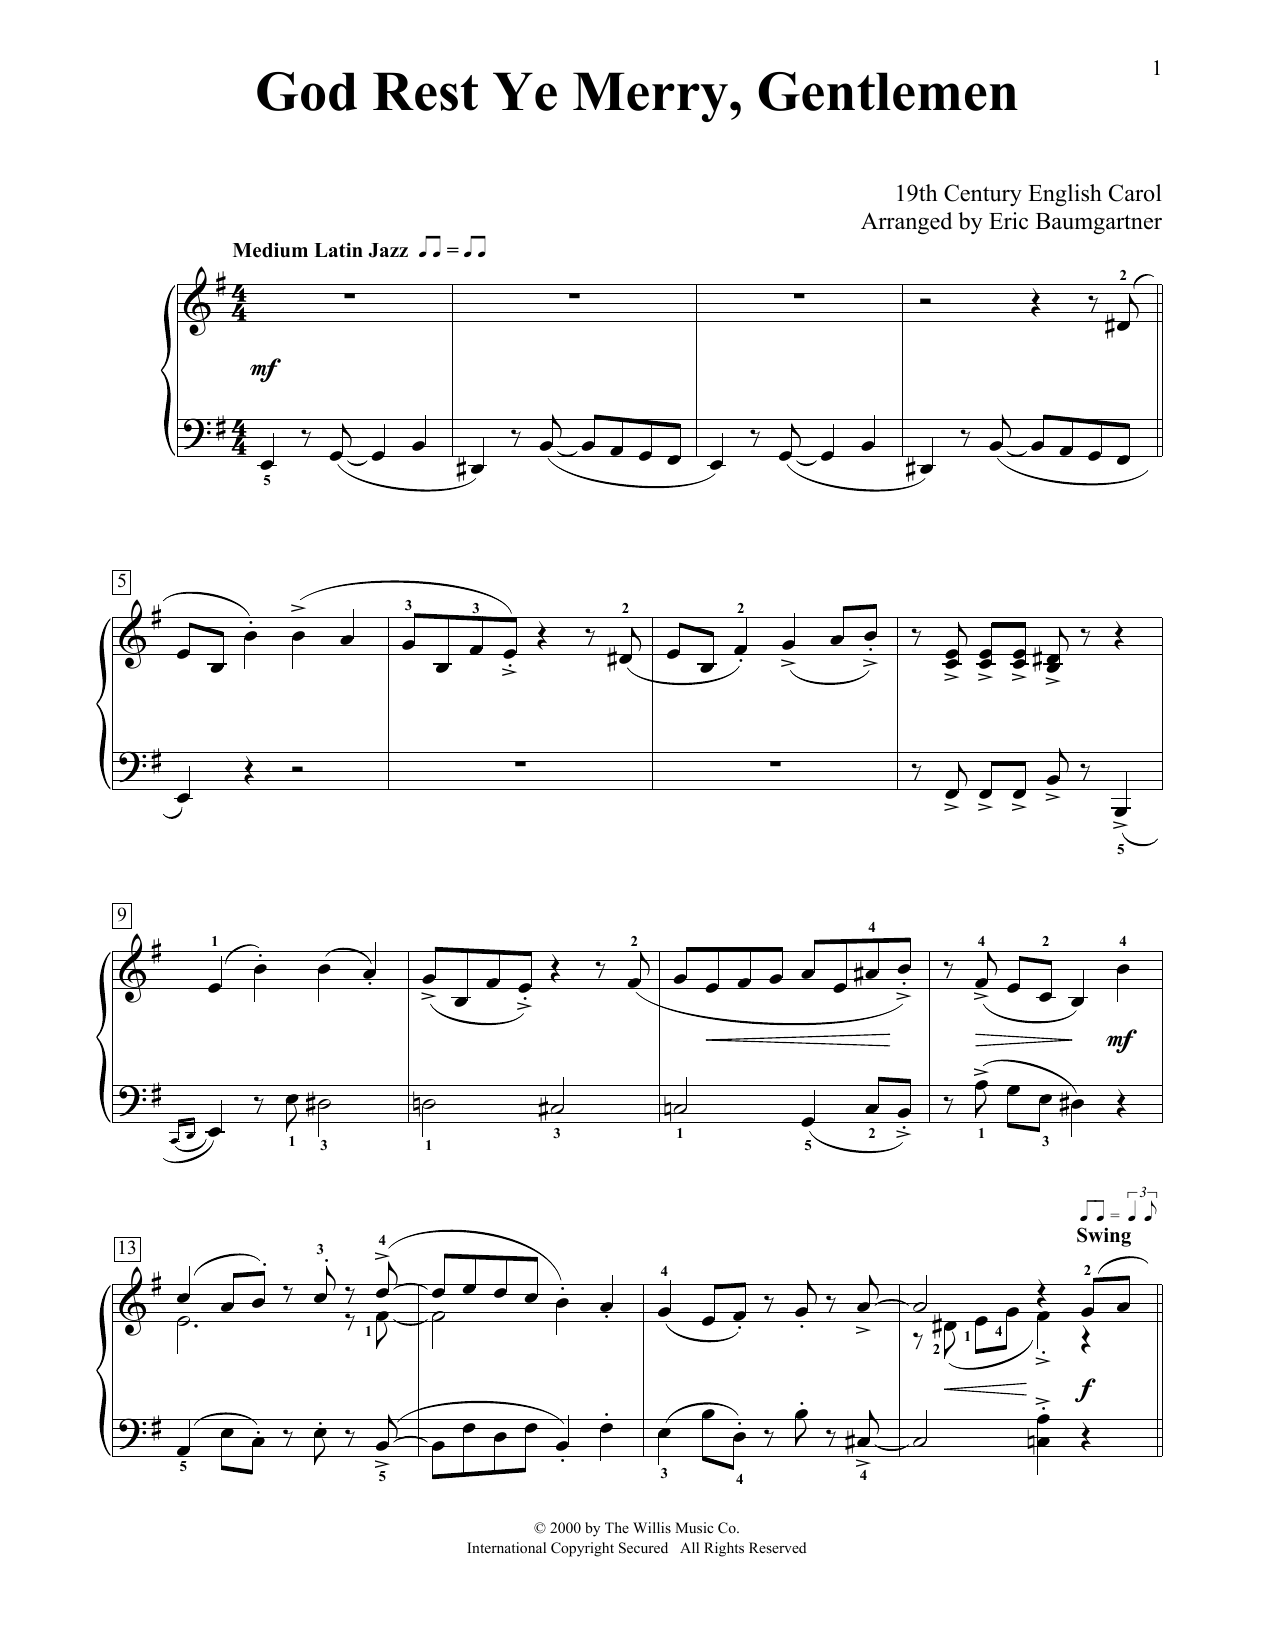 19th Century English Carol God Rest Ye Merry, Gentlemen [Jazz version] (arr. Eric Baumgartner) sheet music notes and chords arranged for Educational Piano